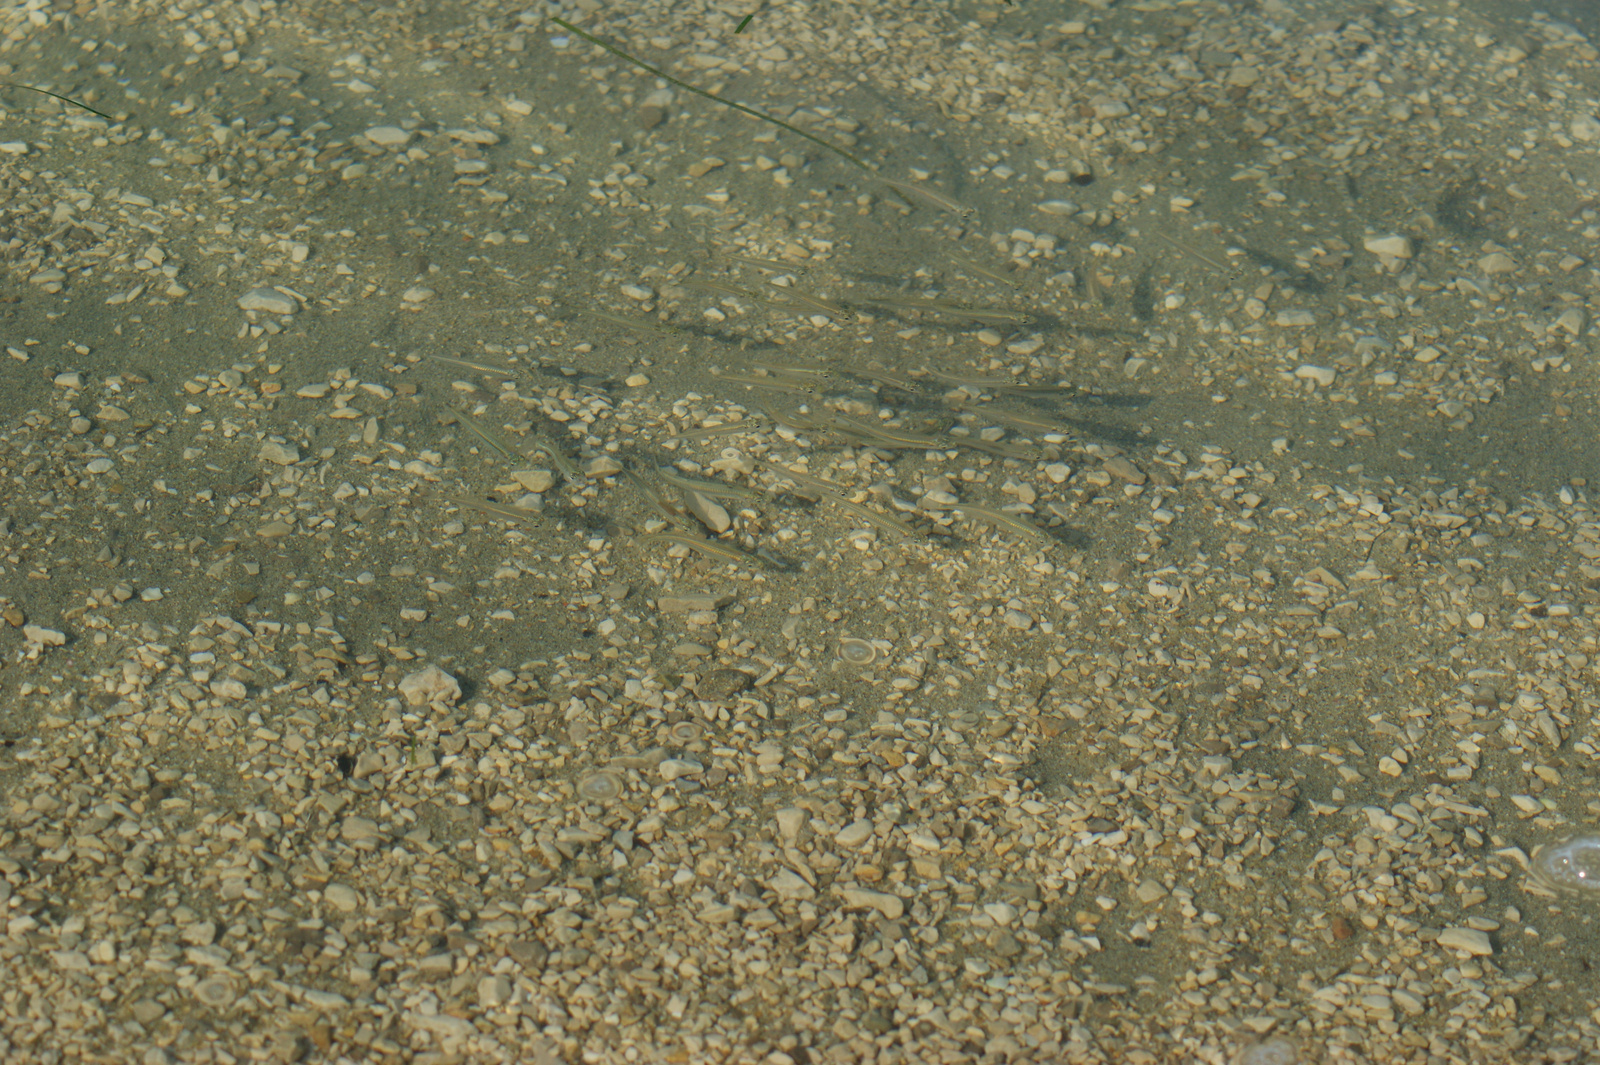 strandoló halak